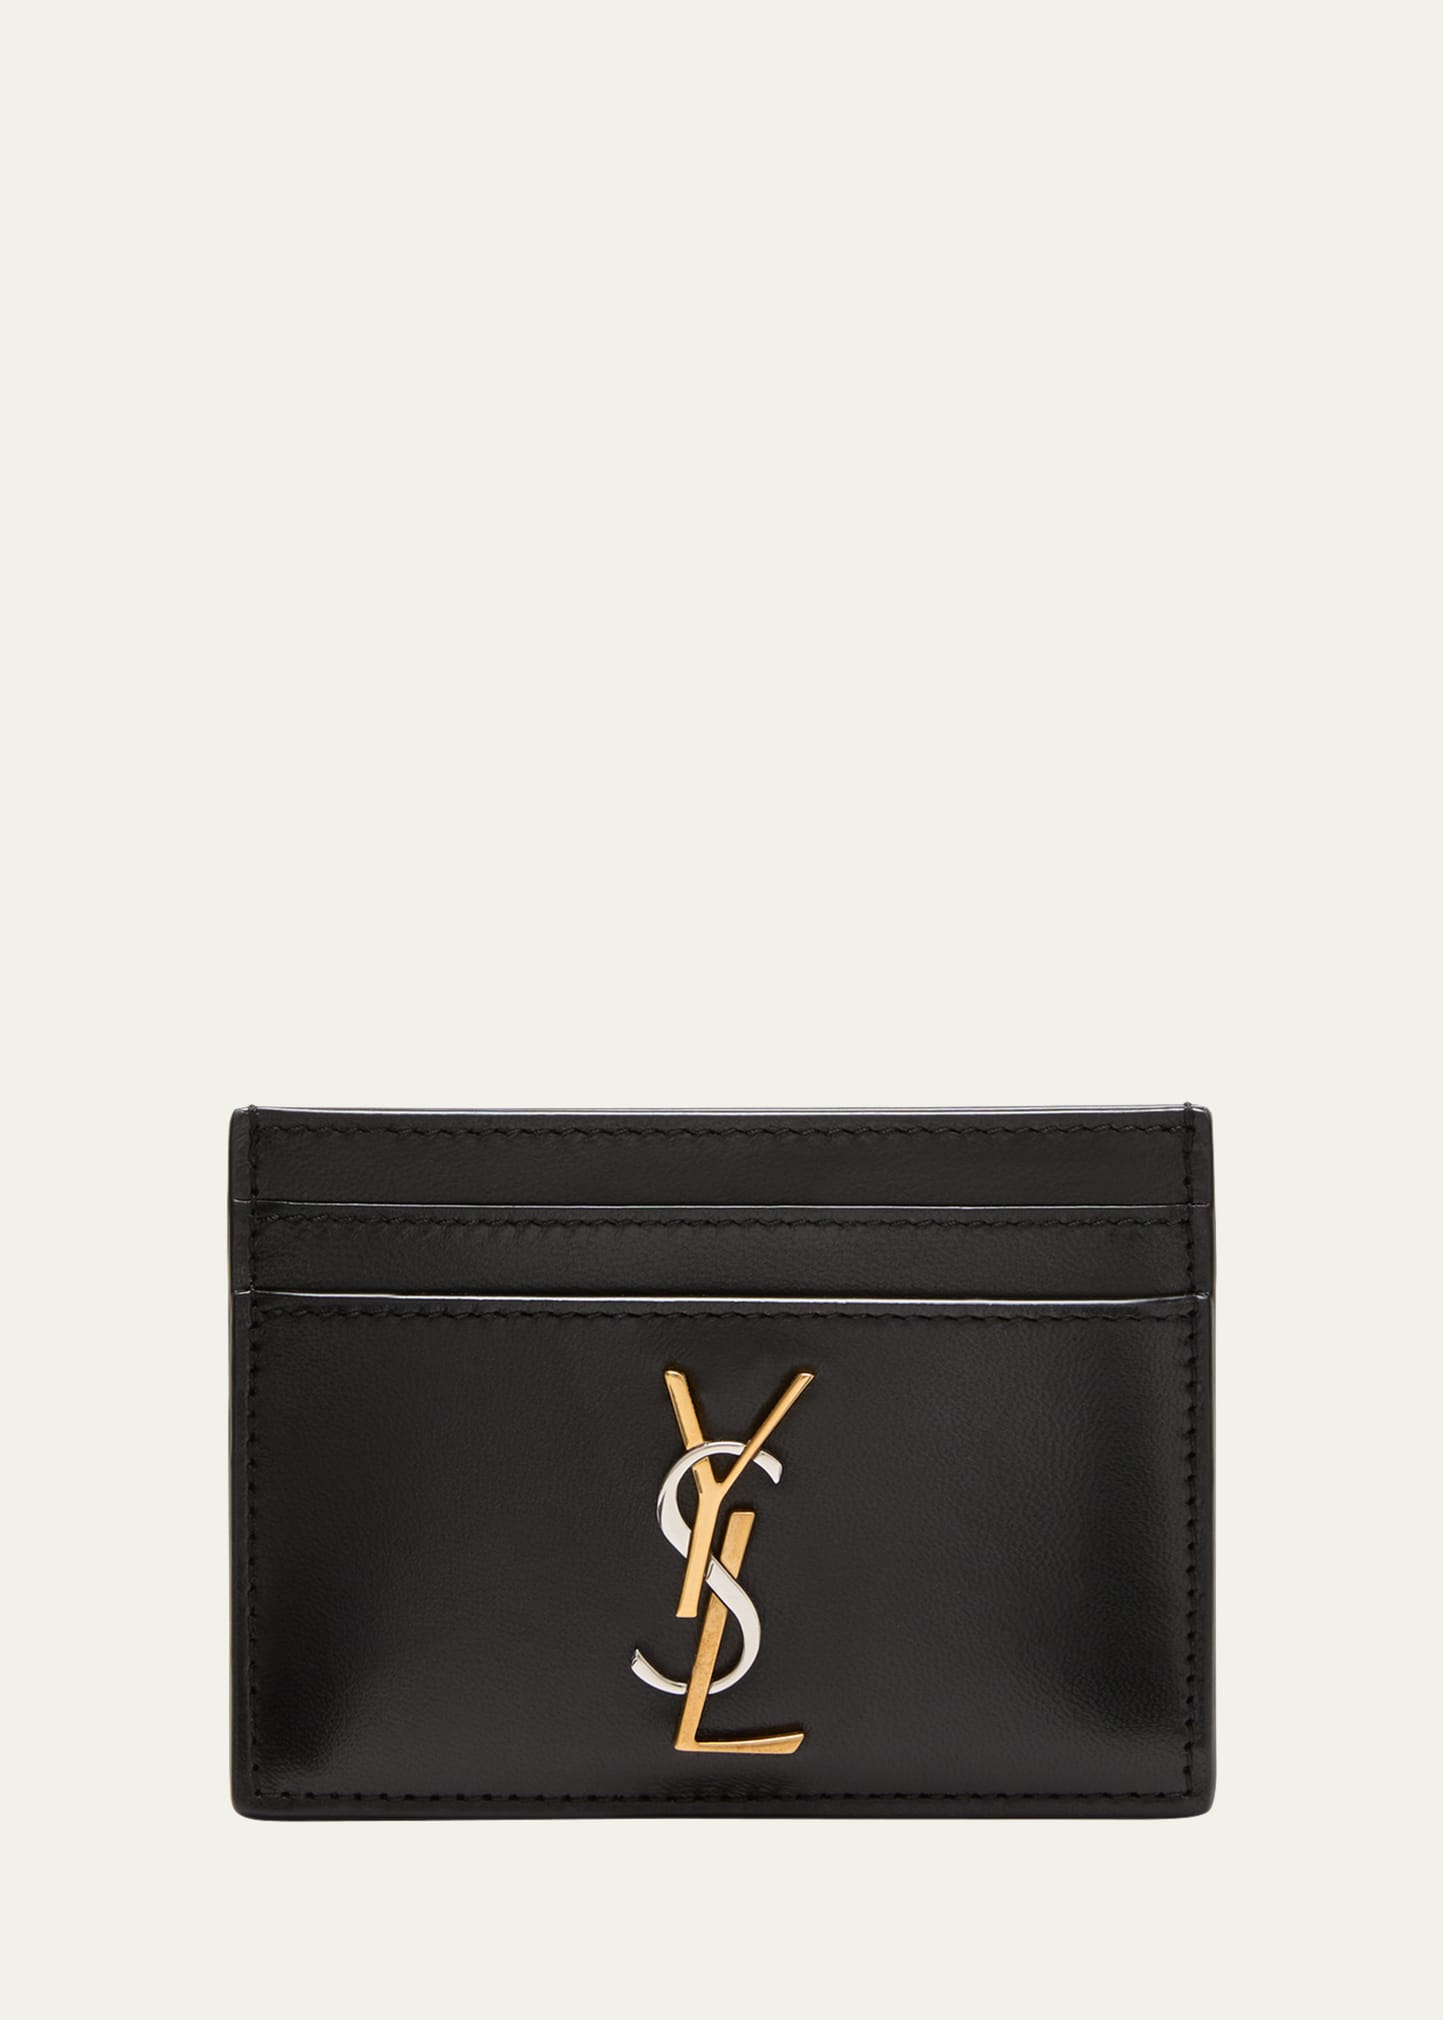 Saint Laurent Tricolor Ysl Monogram Leather Card Case In Black